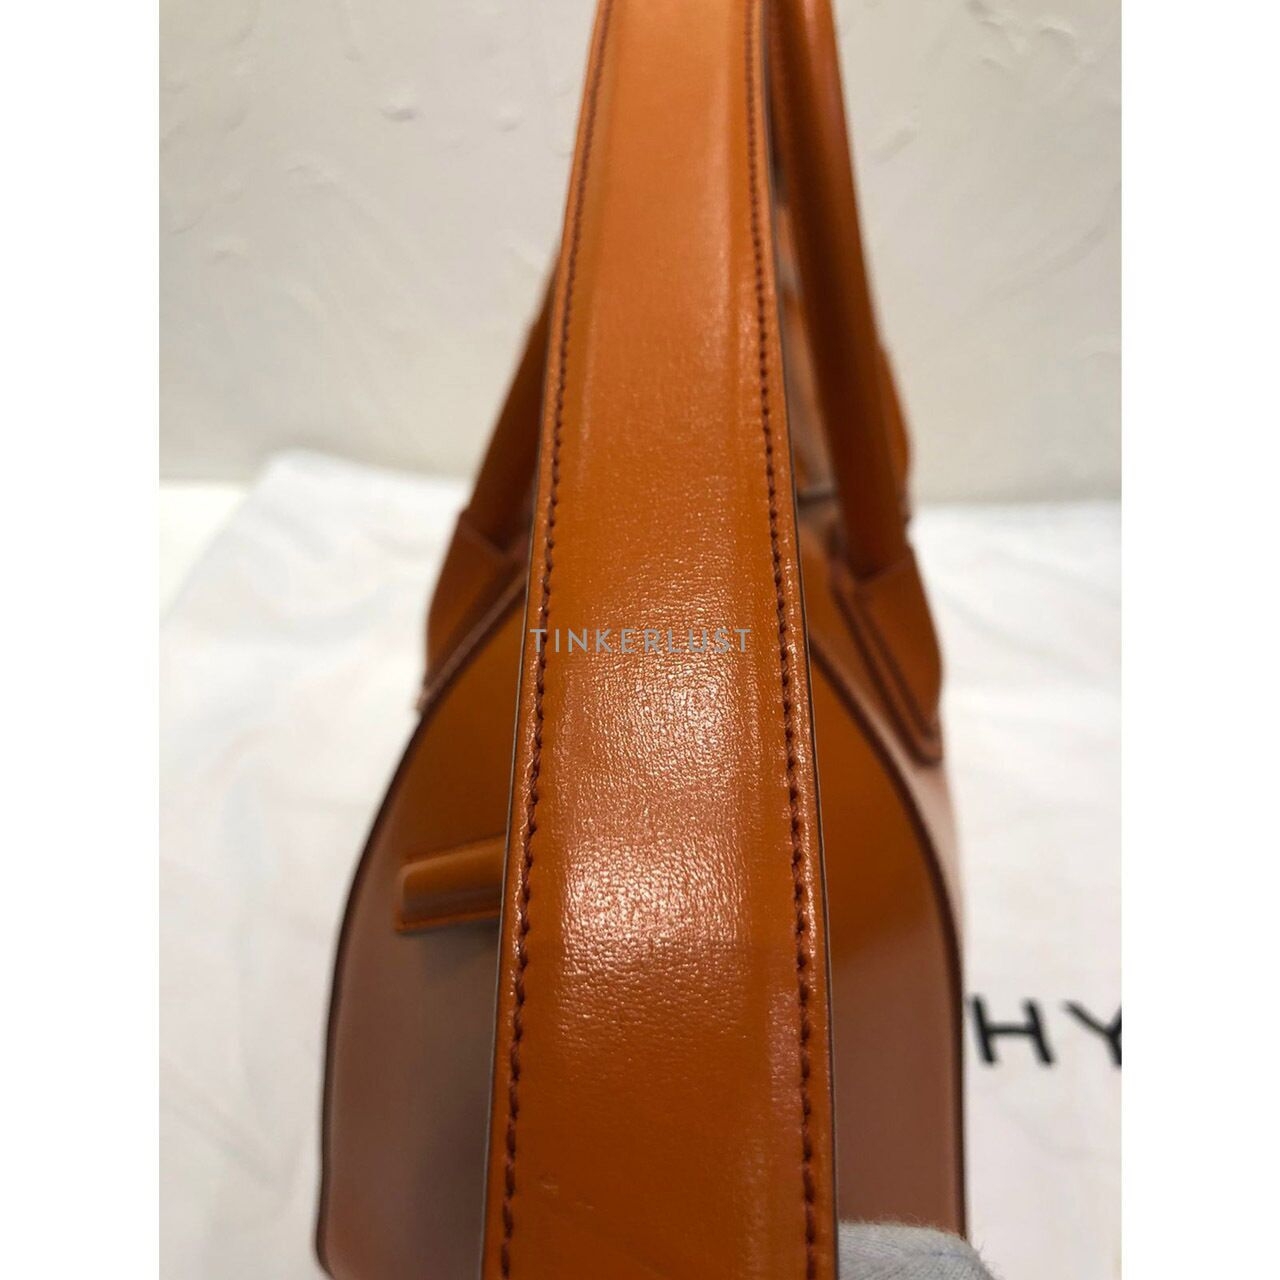 Givenchy Antigona Medium Orange Smooth Leather 2012 GHW Satchel